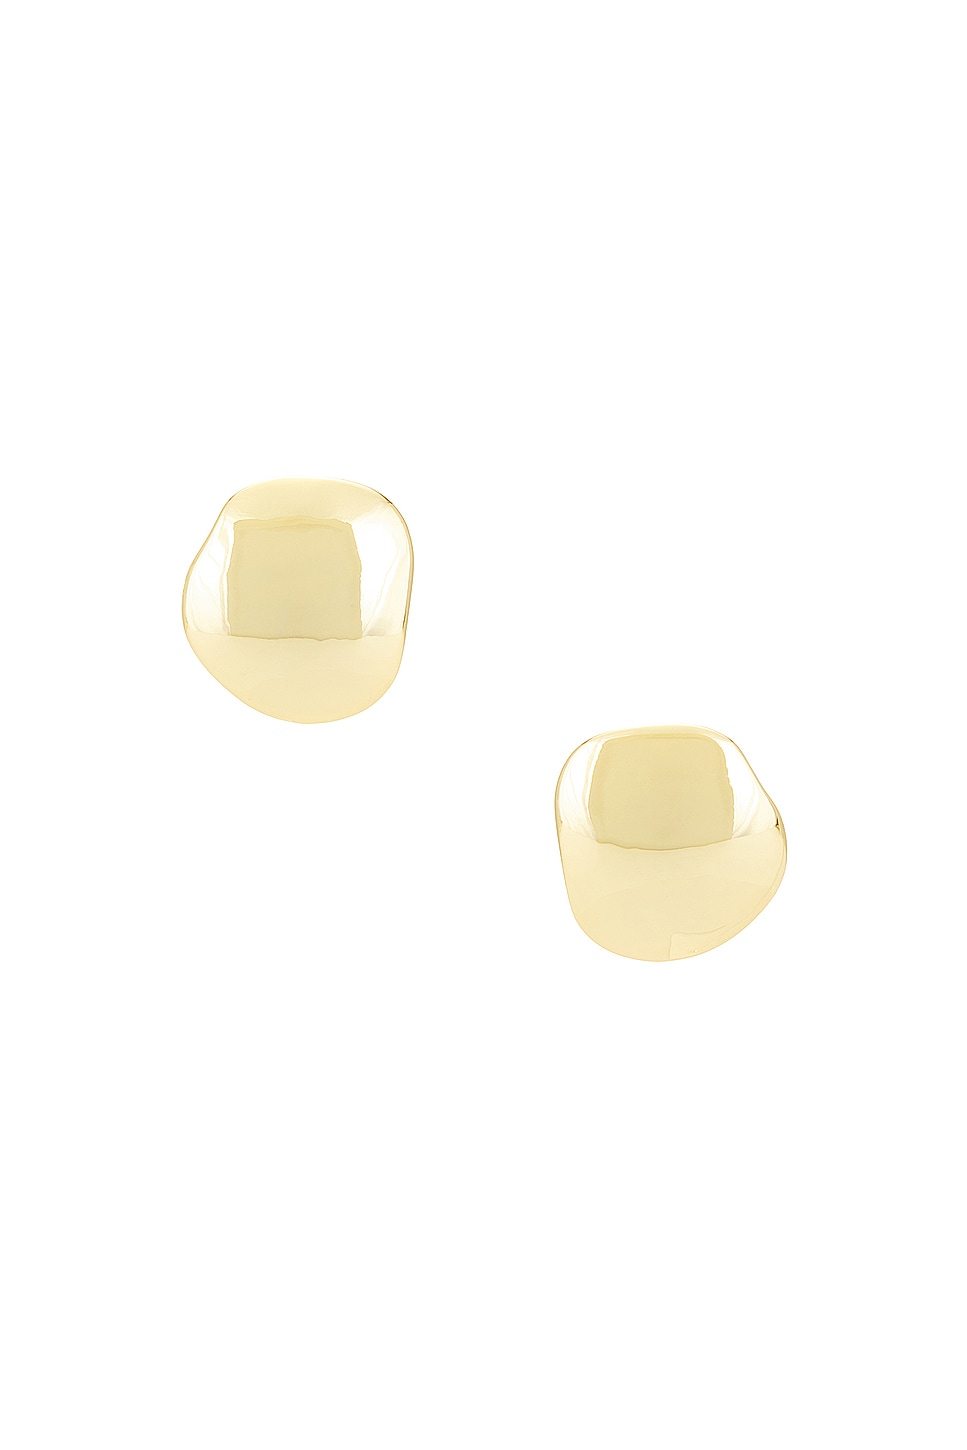 Discus Button Earrings in Metallic Gold